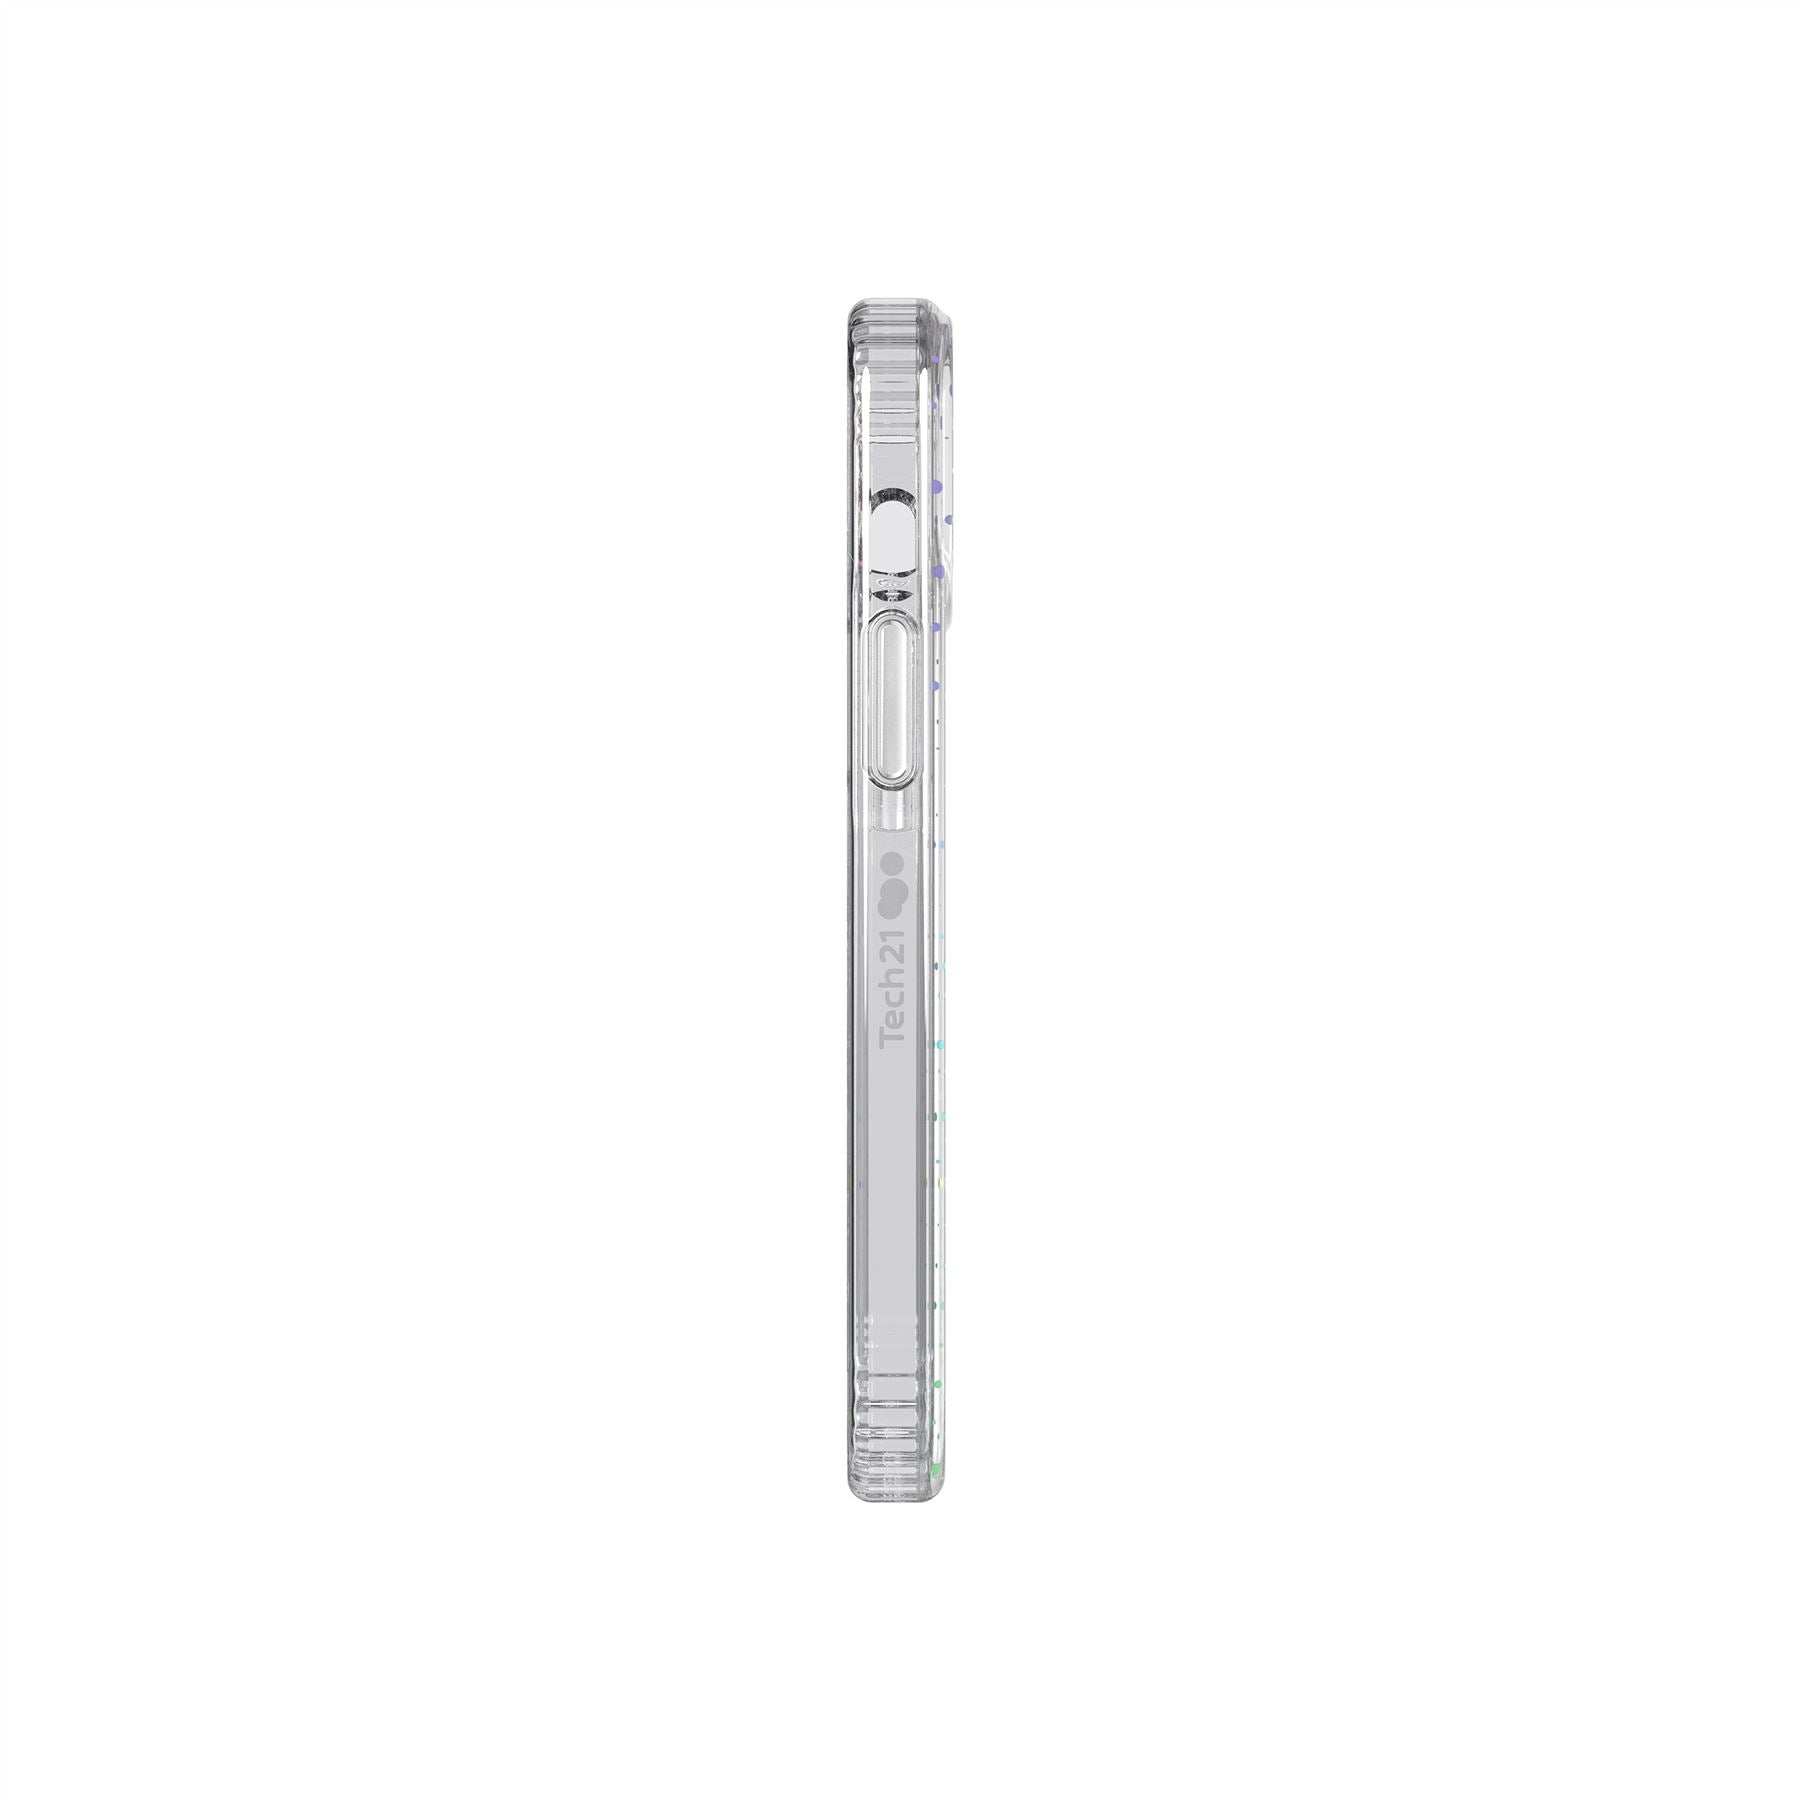 Evo Sparkle - Apple iPhone 13 mini Case - Radiant